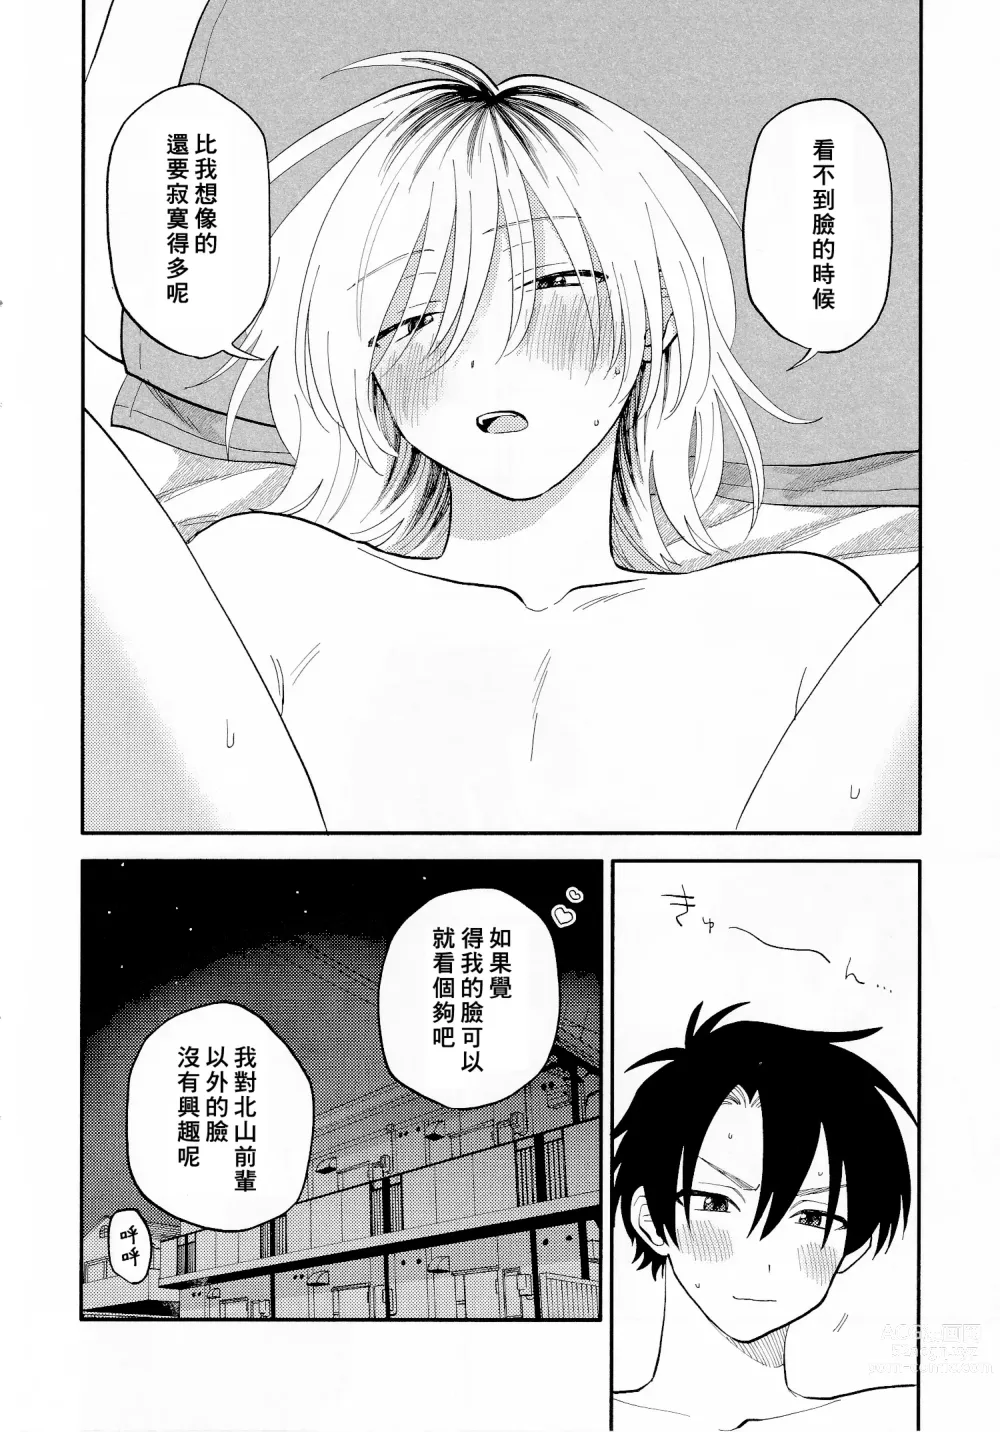 Page 259 of manga 北山君与南谷君 2